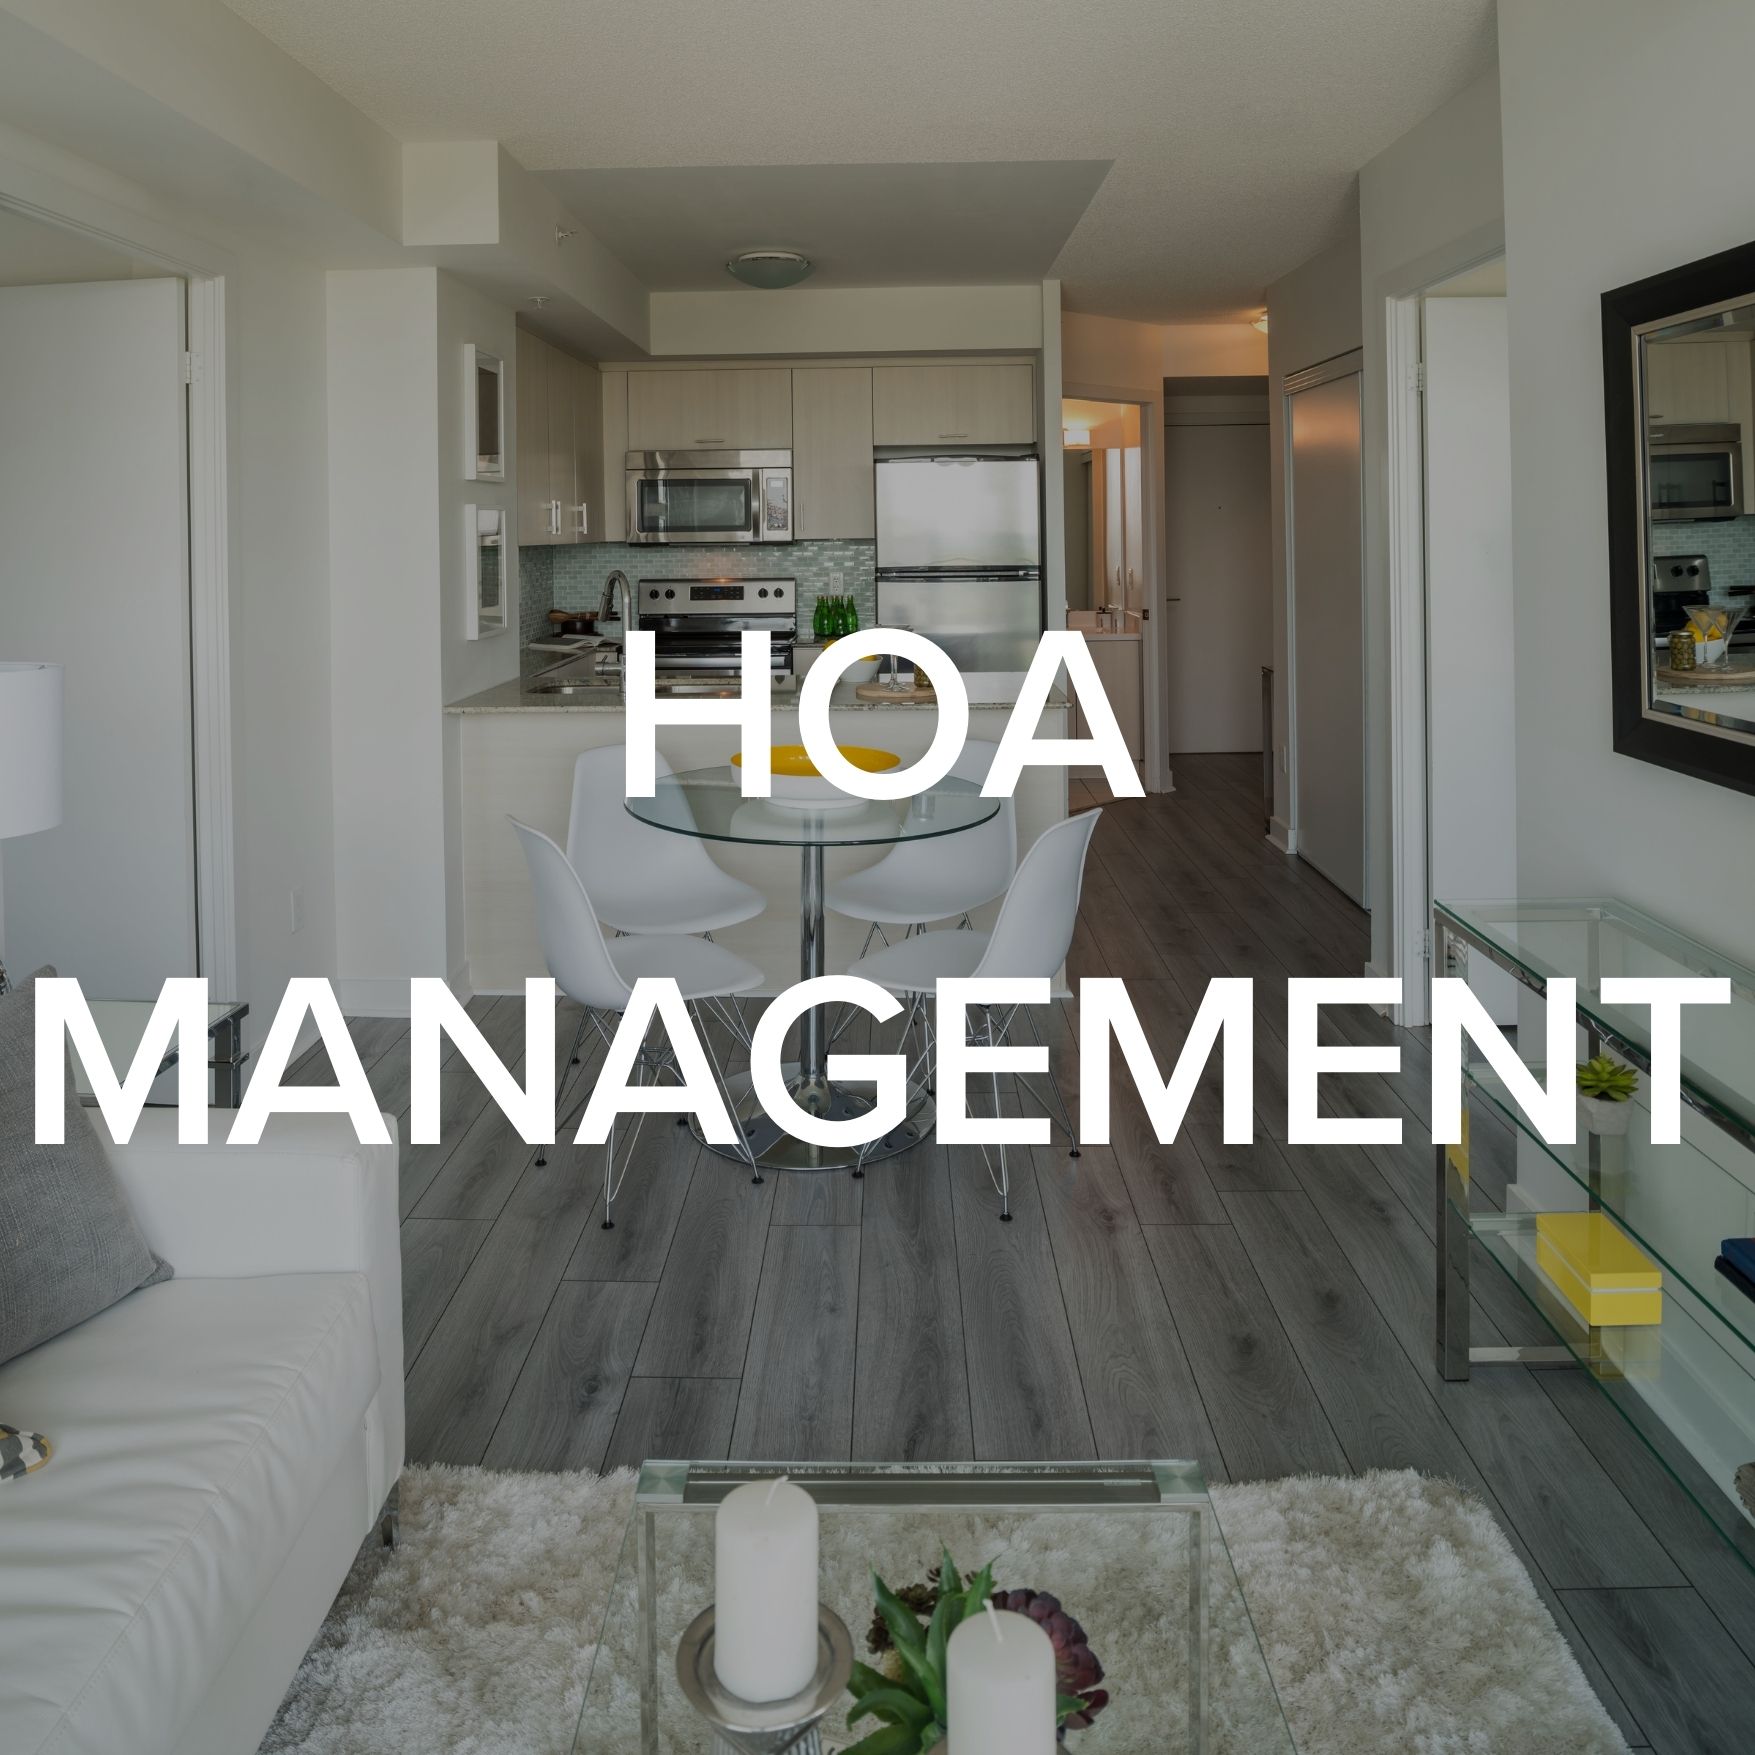 HOA Managment